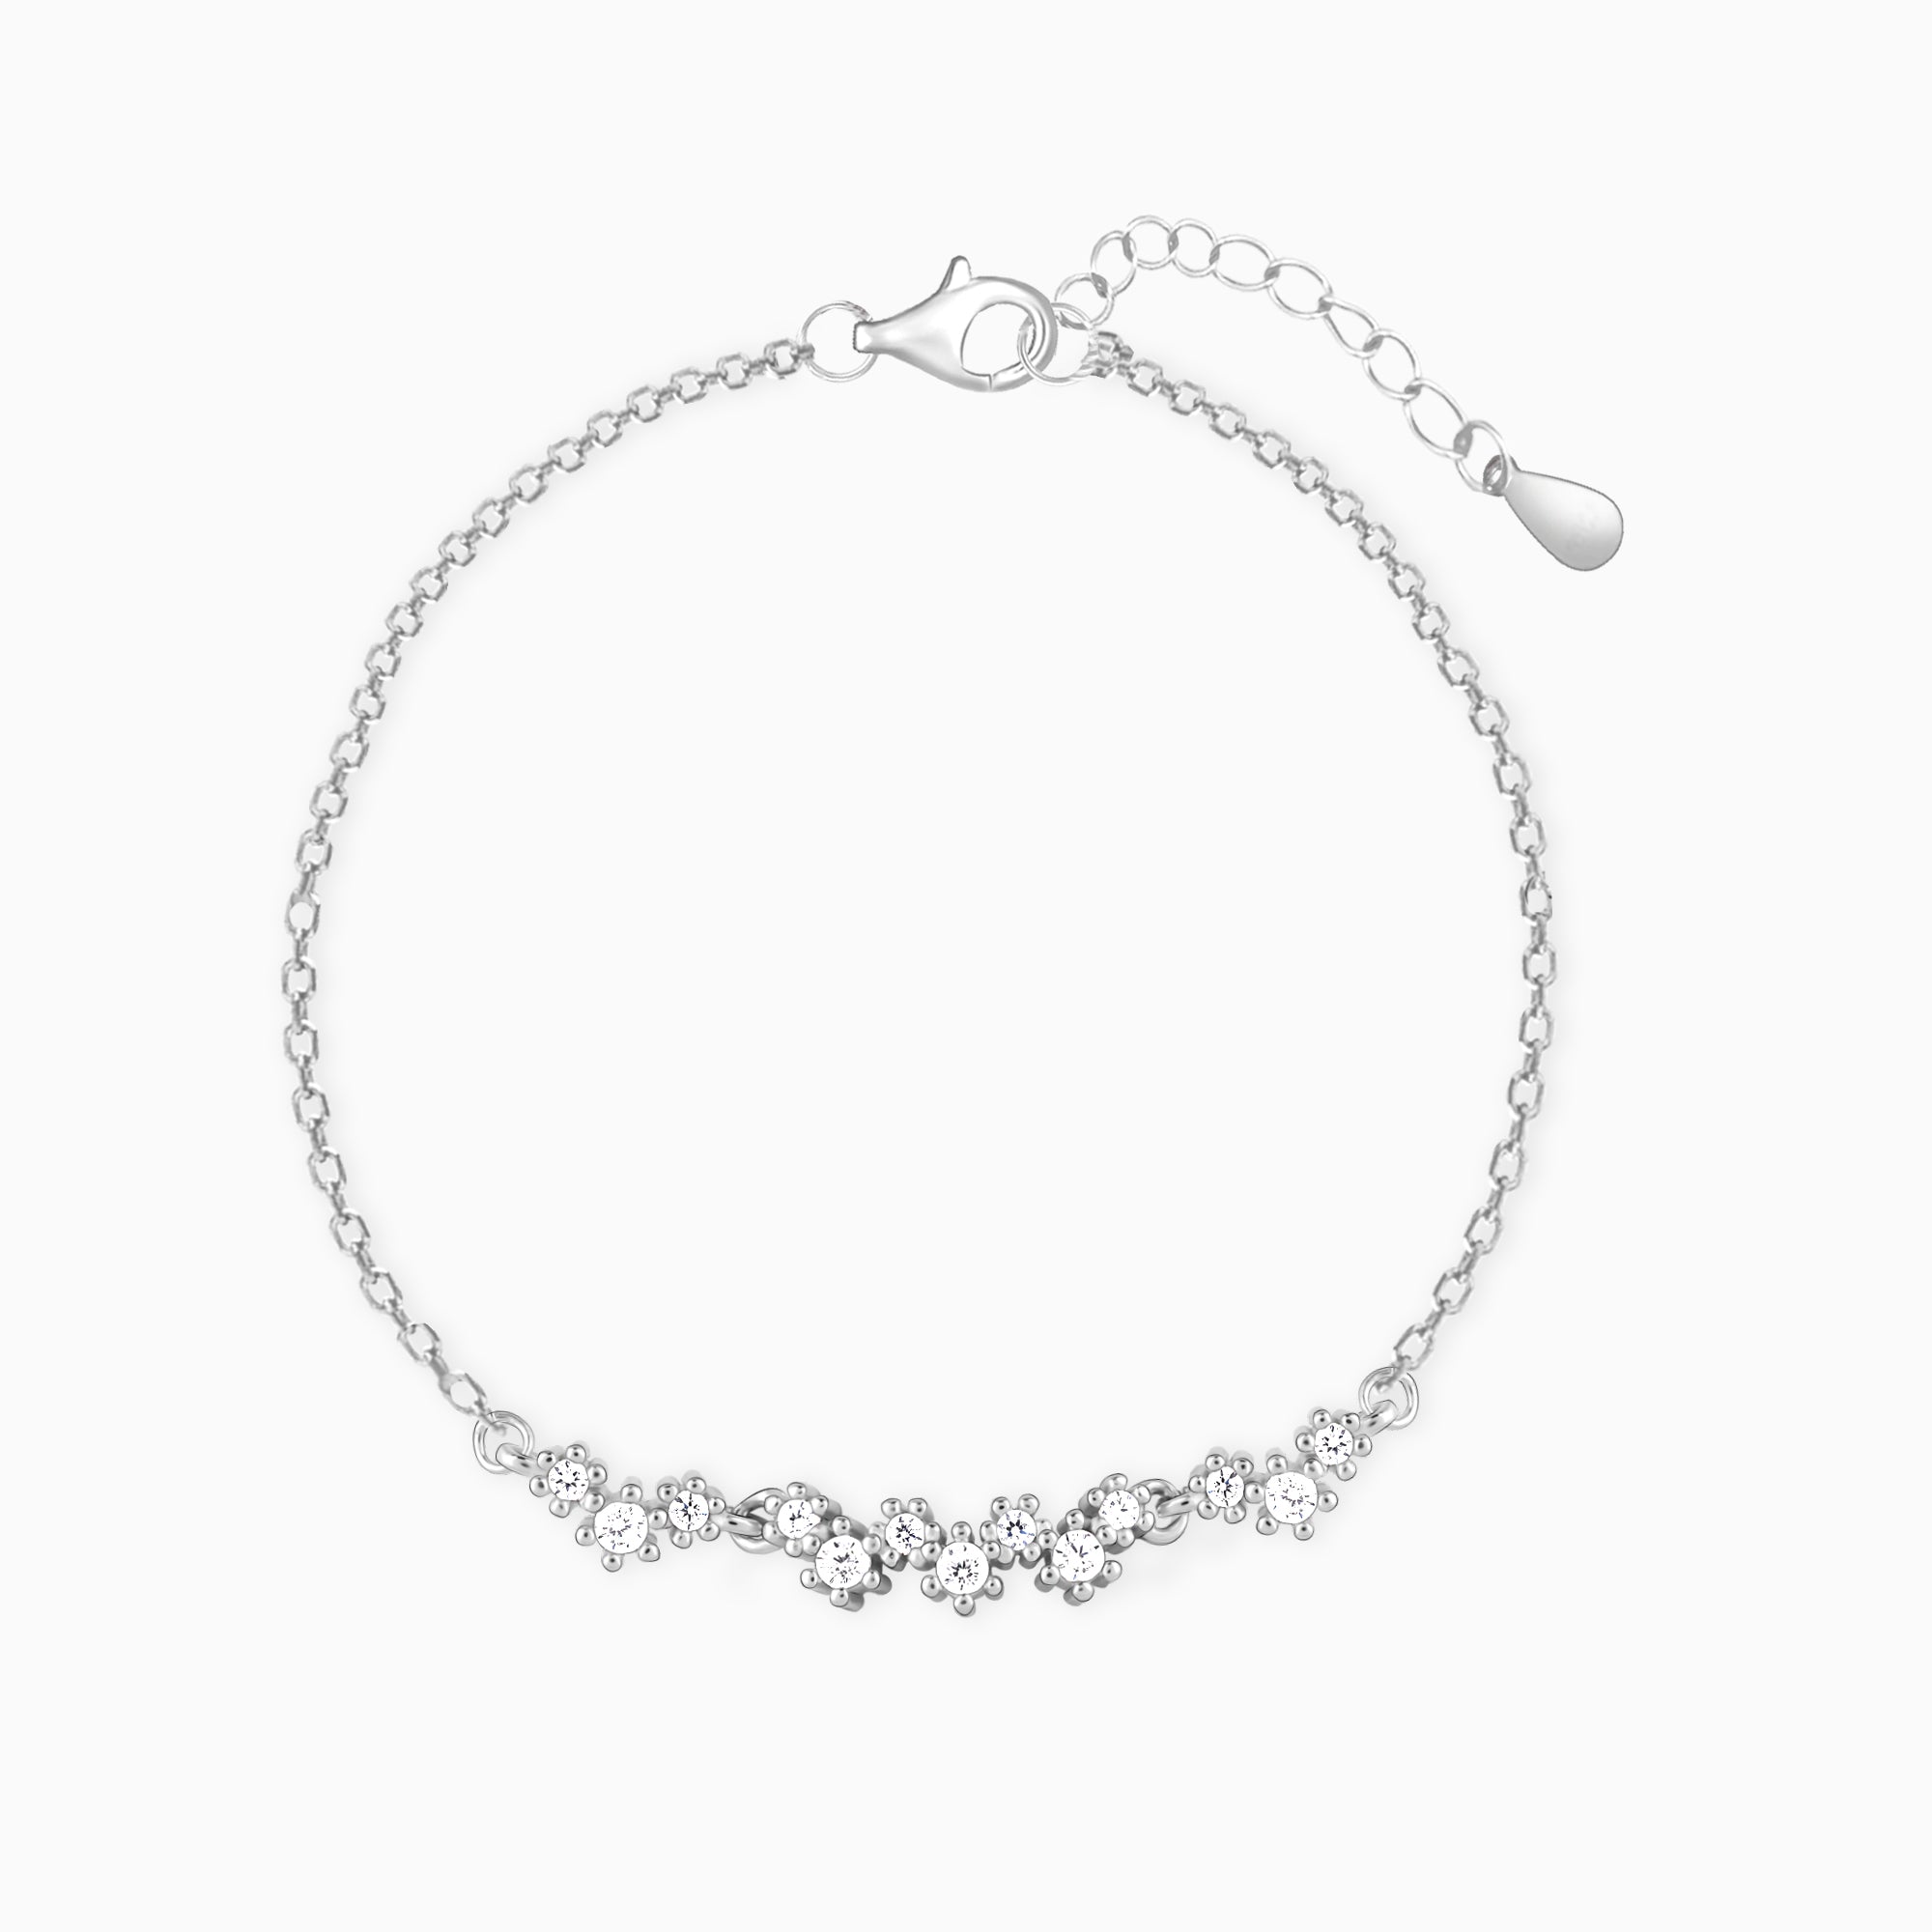 Rimoni Silver Couples Bracelets – The Silver Essence